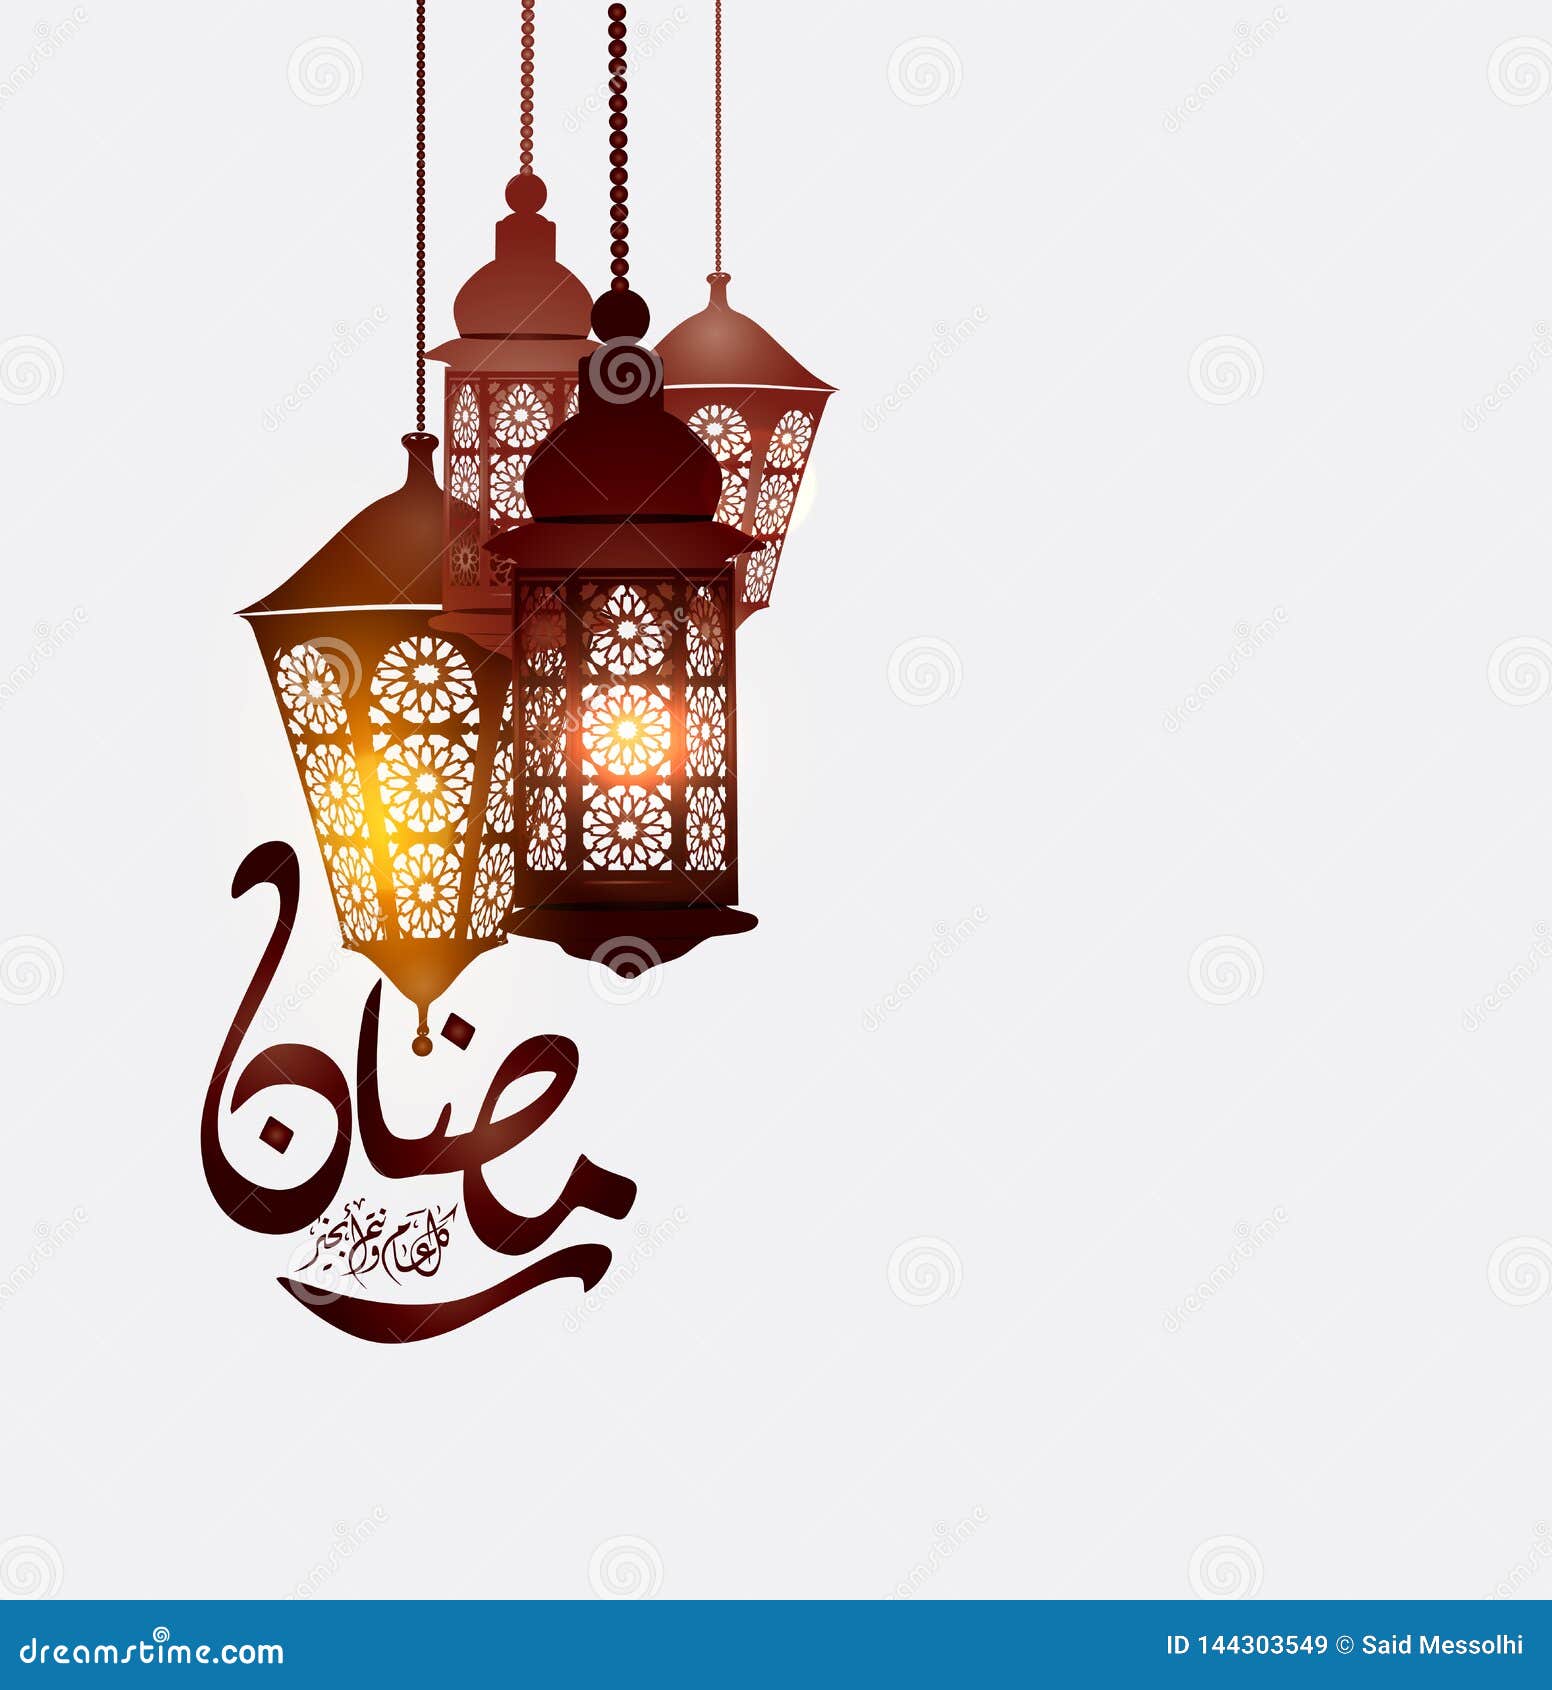 ramadan kareem arabic calligraphy and traditonal lantern for islamic greeting background